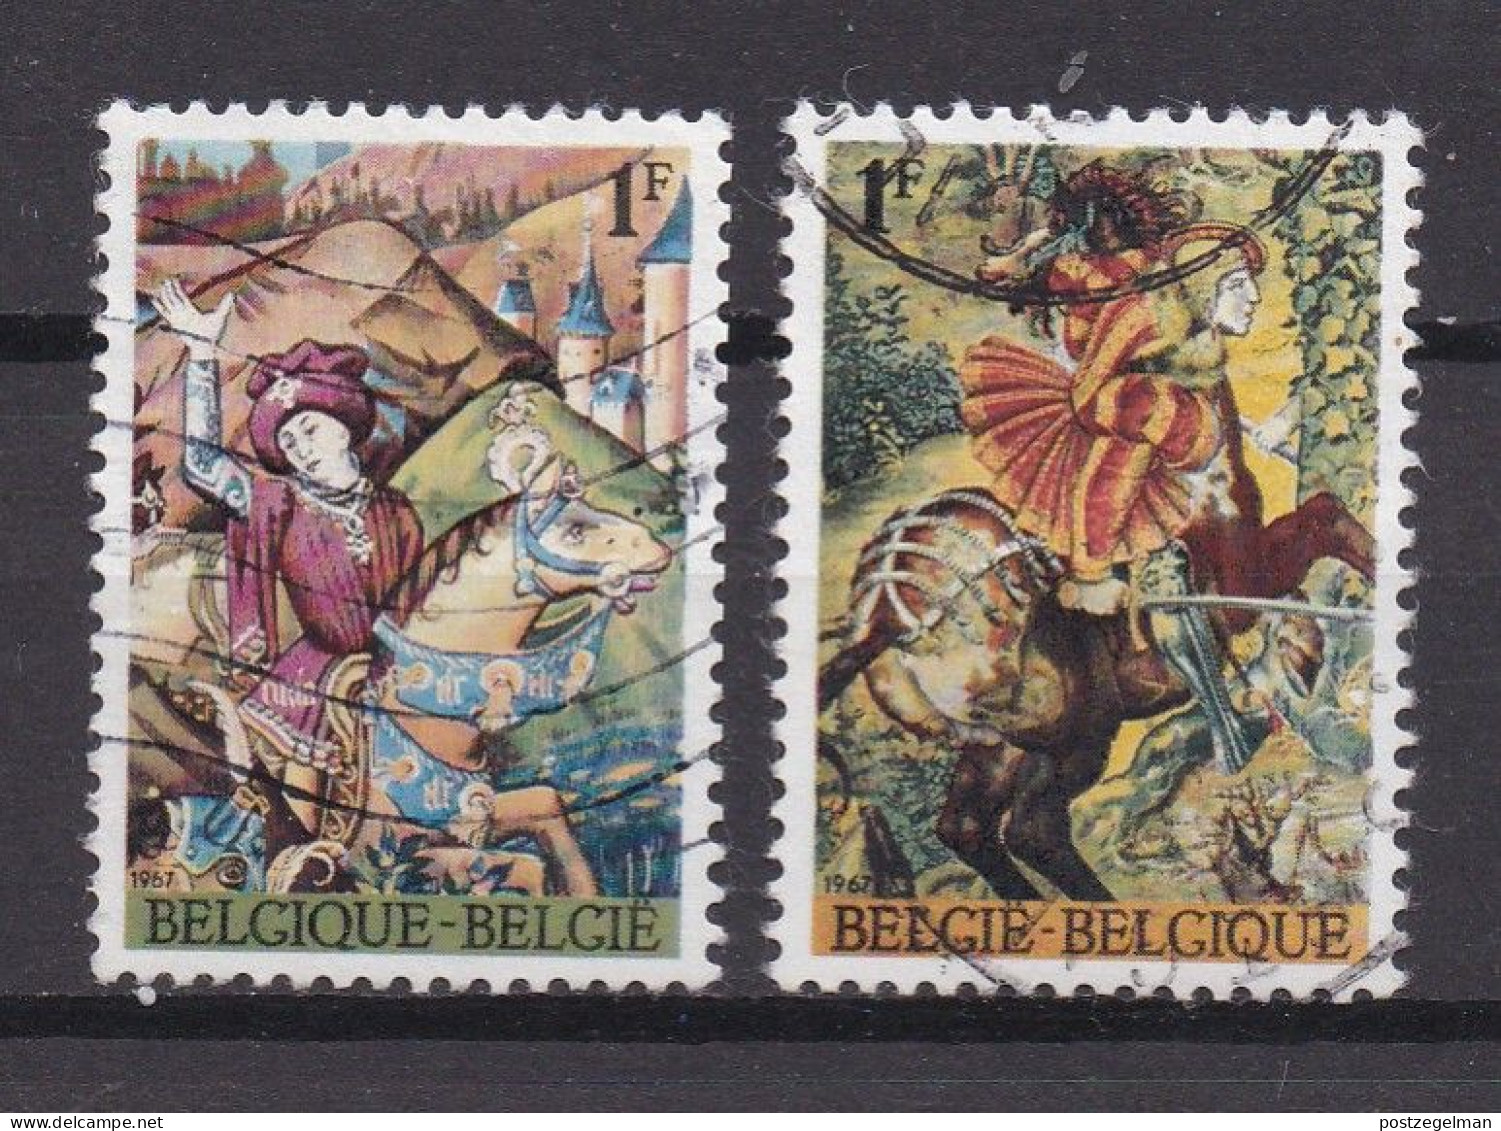 BELGIUM,1967, Used Stamp(s), Lodewyk De Raet , M1482-1483 , Scan 10445, - Gebraucht